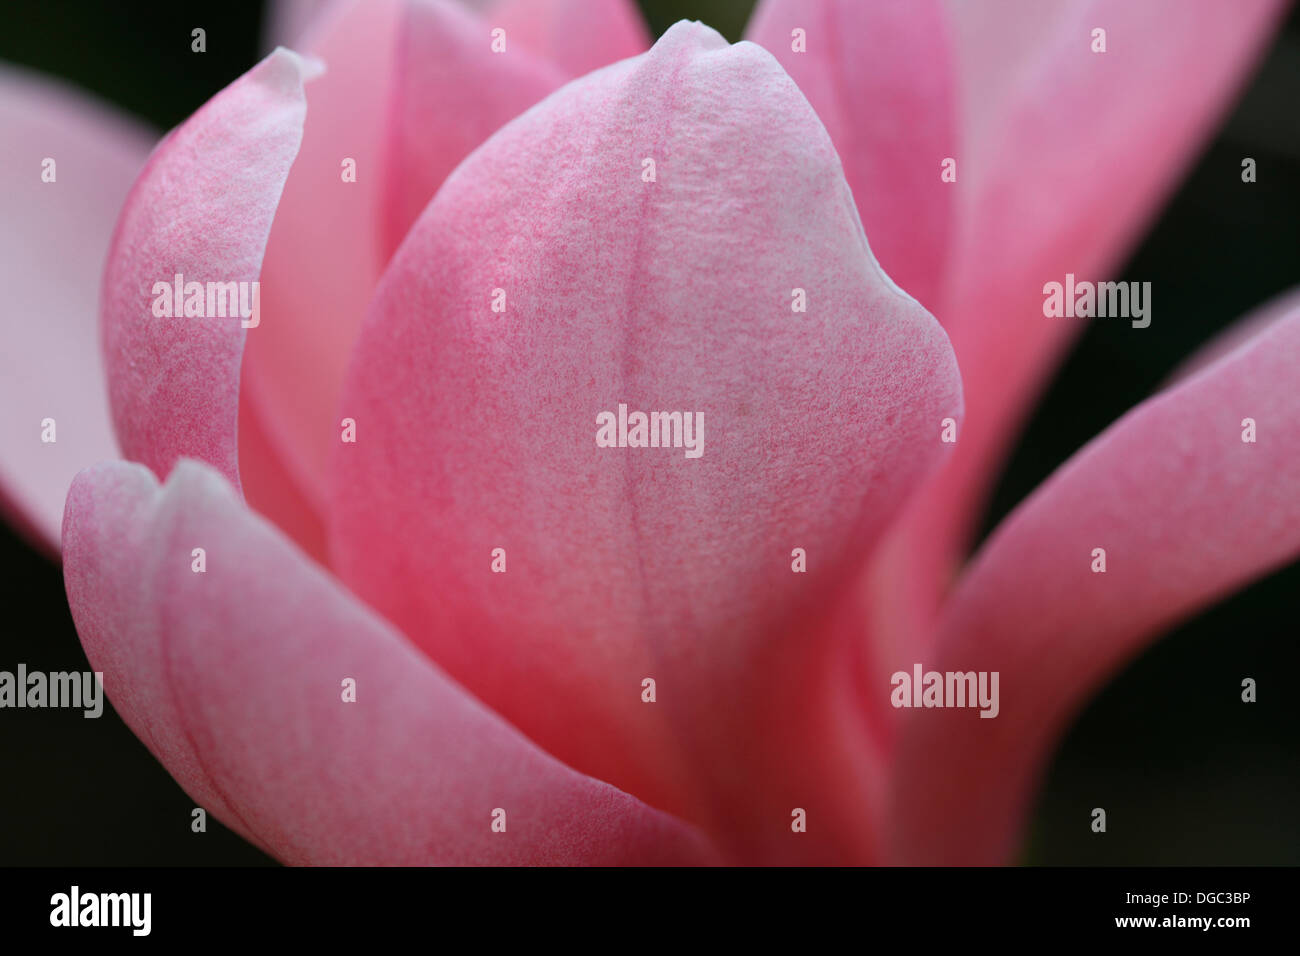 exquisite magnolia sprengeri pink bloom gently opening dramatic contrast Jane Ann Butler Photography  JABP1081 Stock Photo